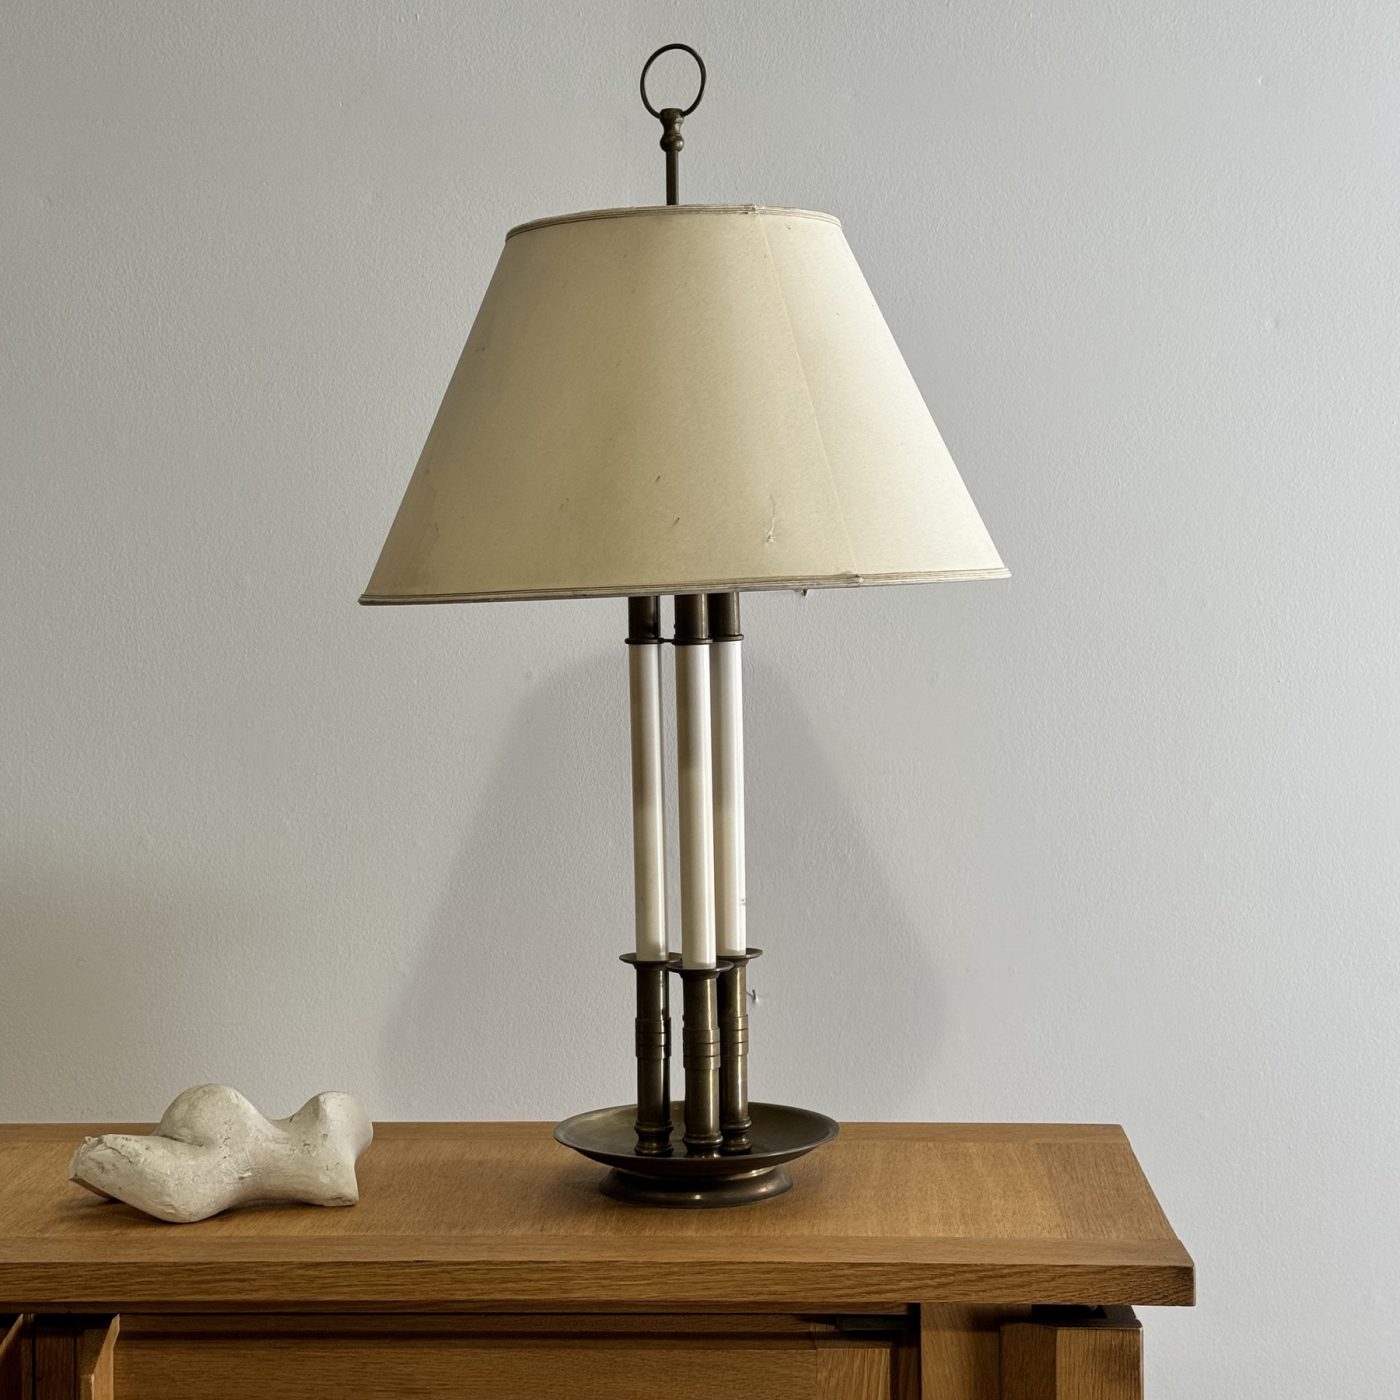 objet-vagabond-1950-lamp0006